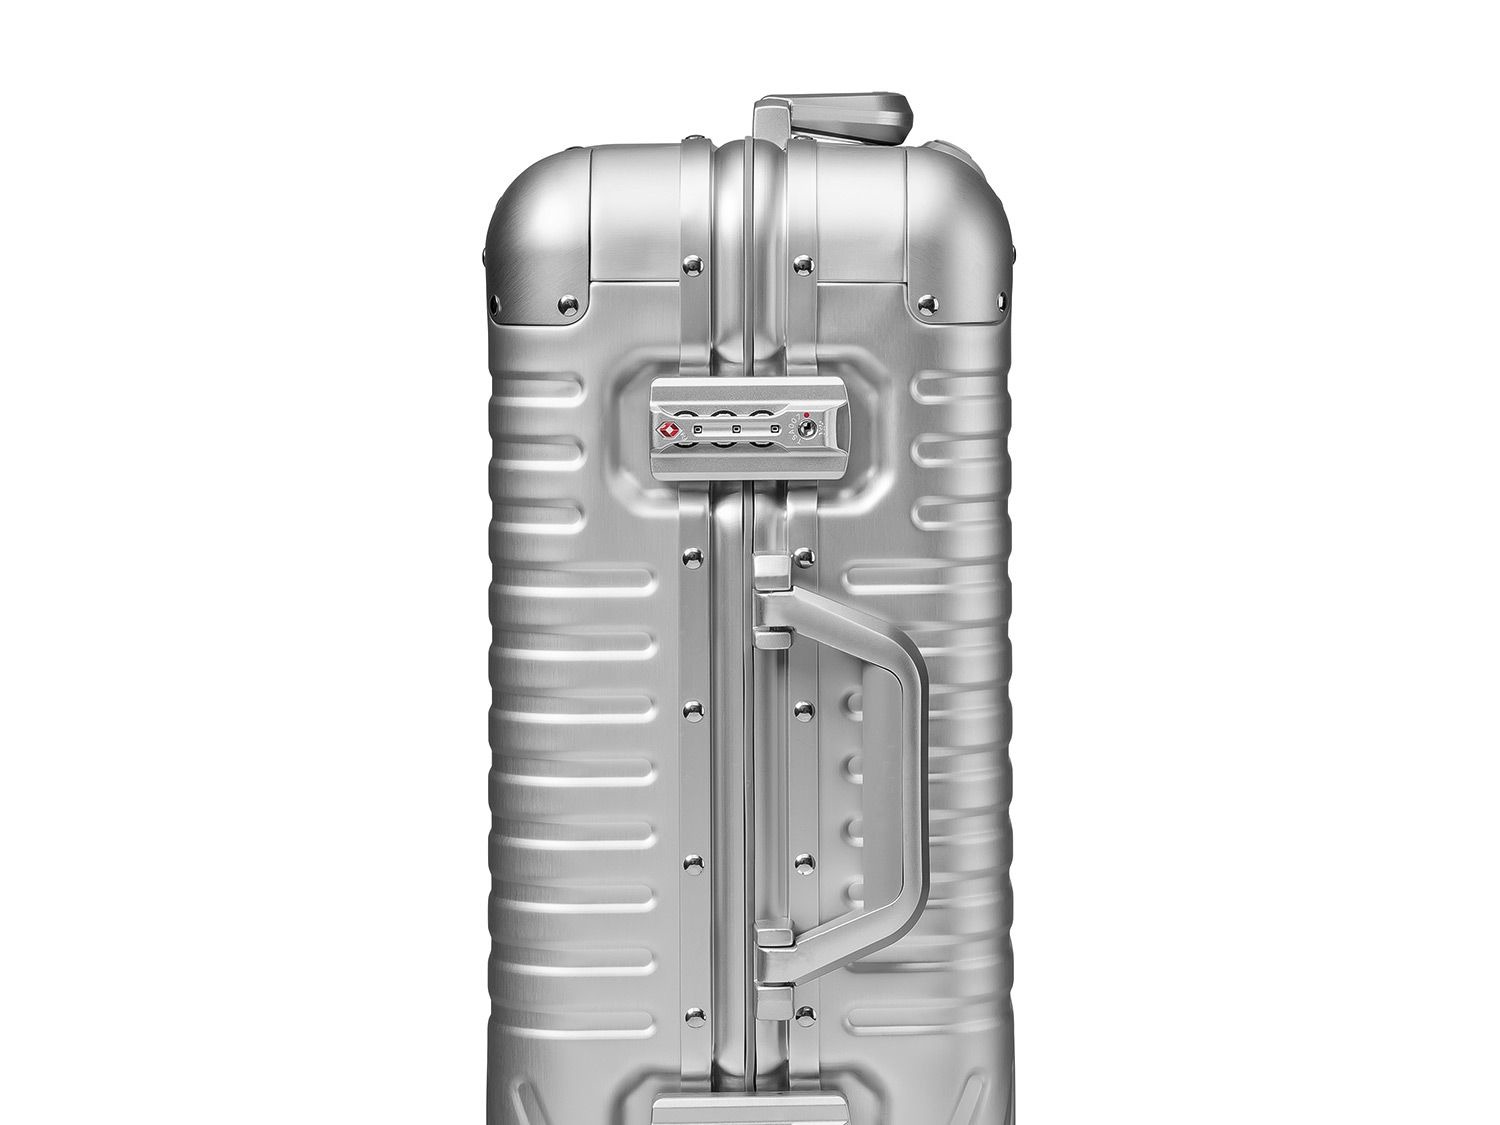 TOPMOVE® Aluminium Trolley-Reisekoffer, 32 l | LIDL